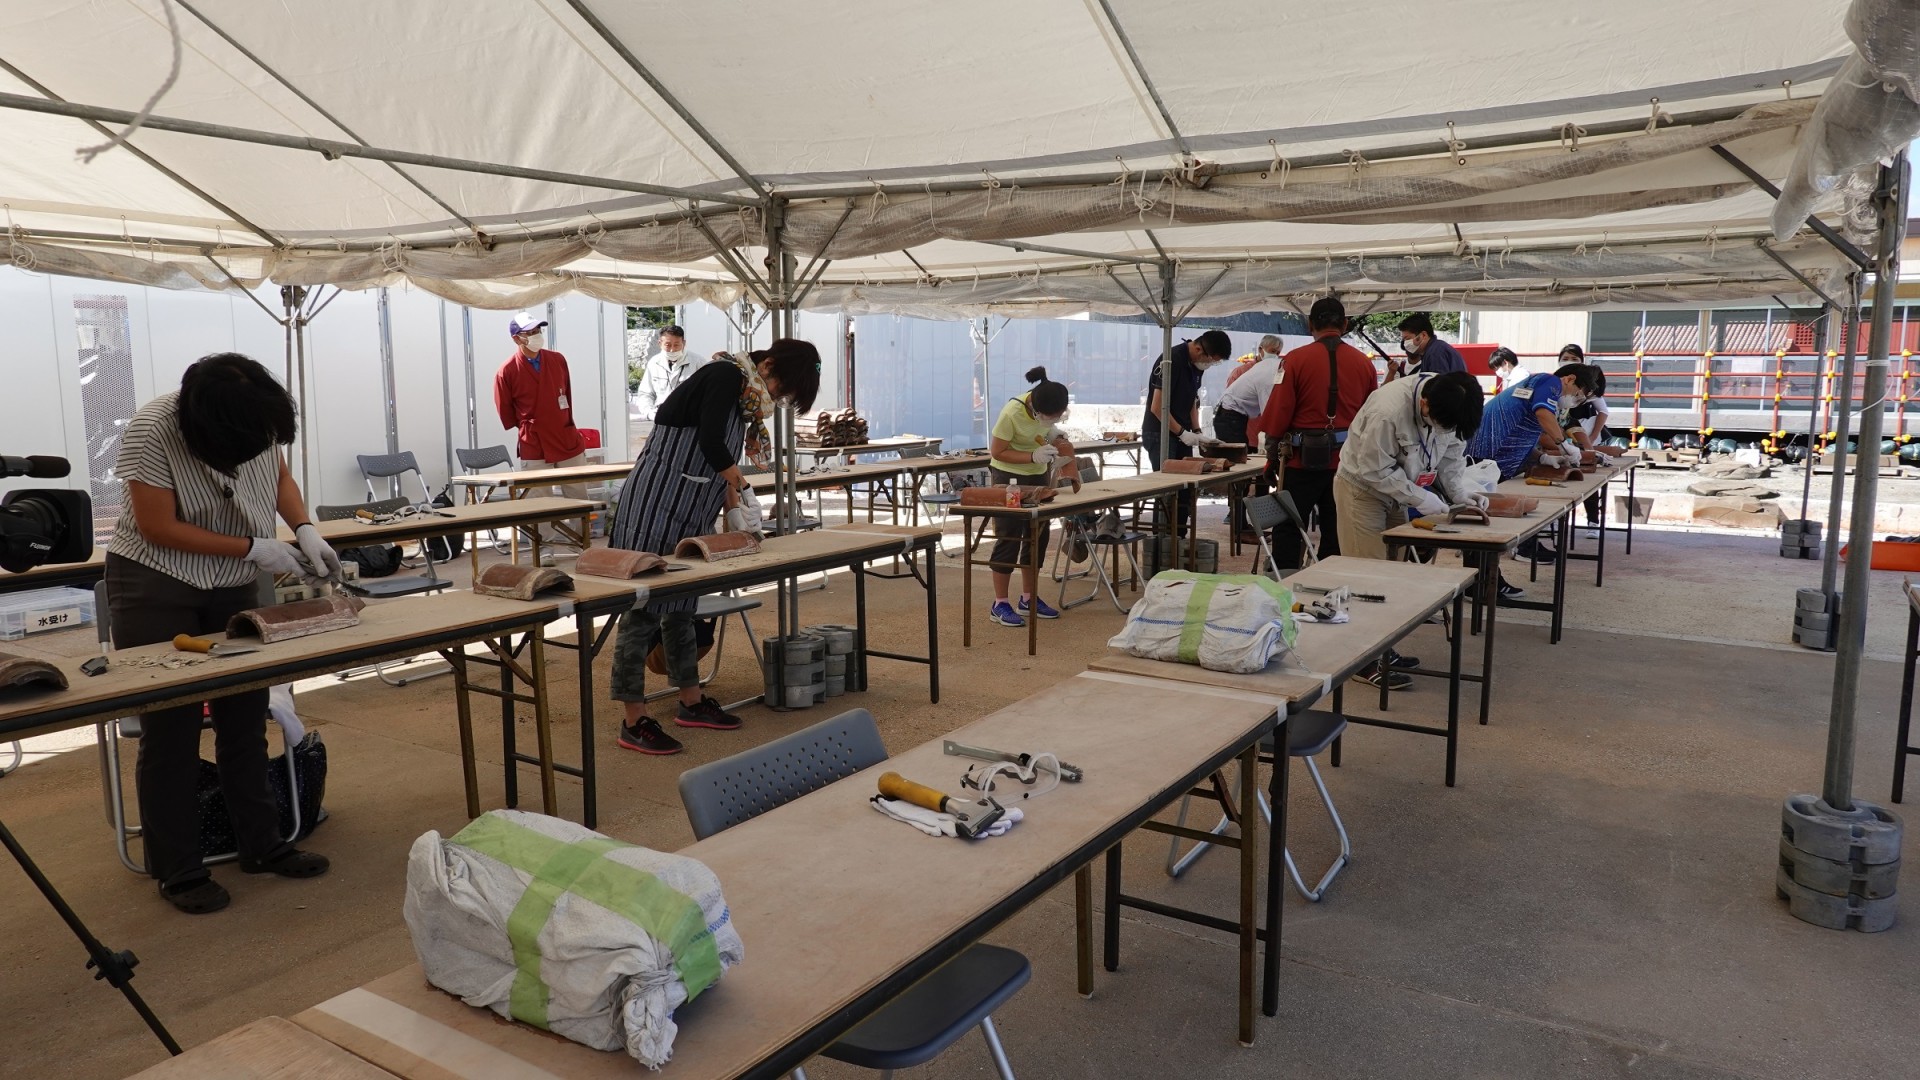 volunteering for peeling shikkui plaster from Shuri Castle red-roof tiles (until April 18)